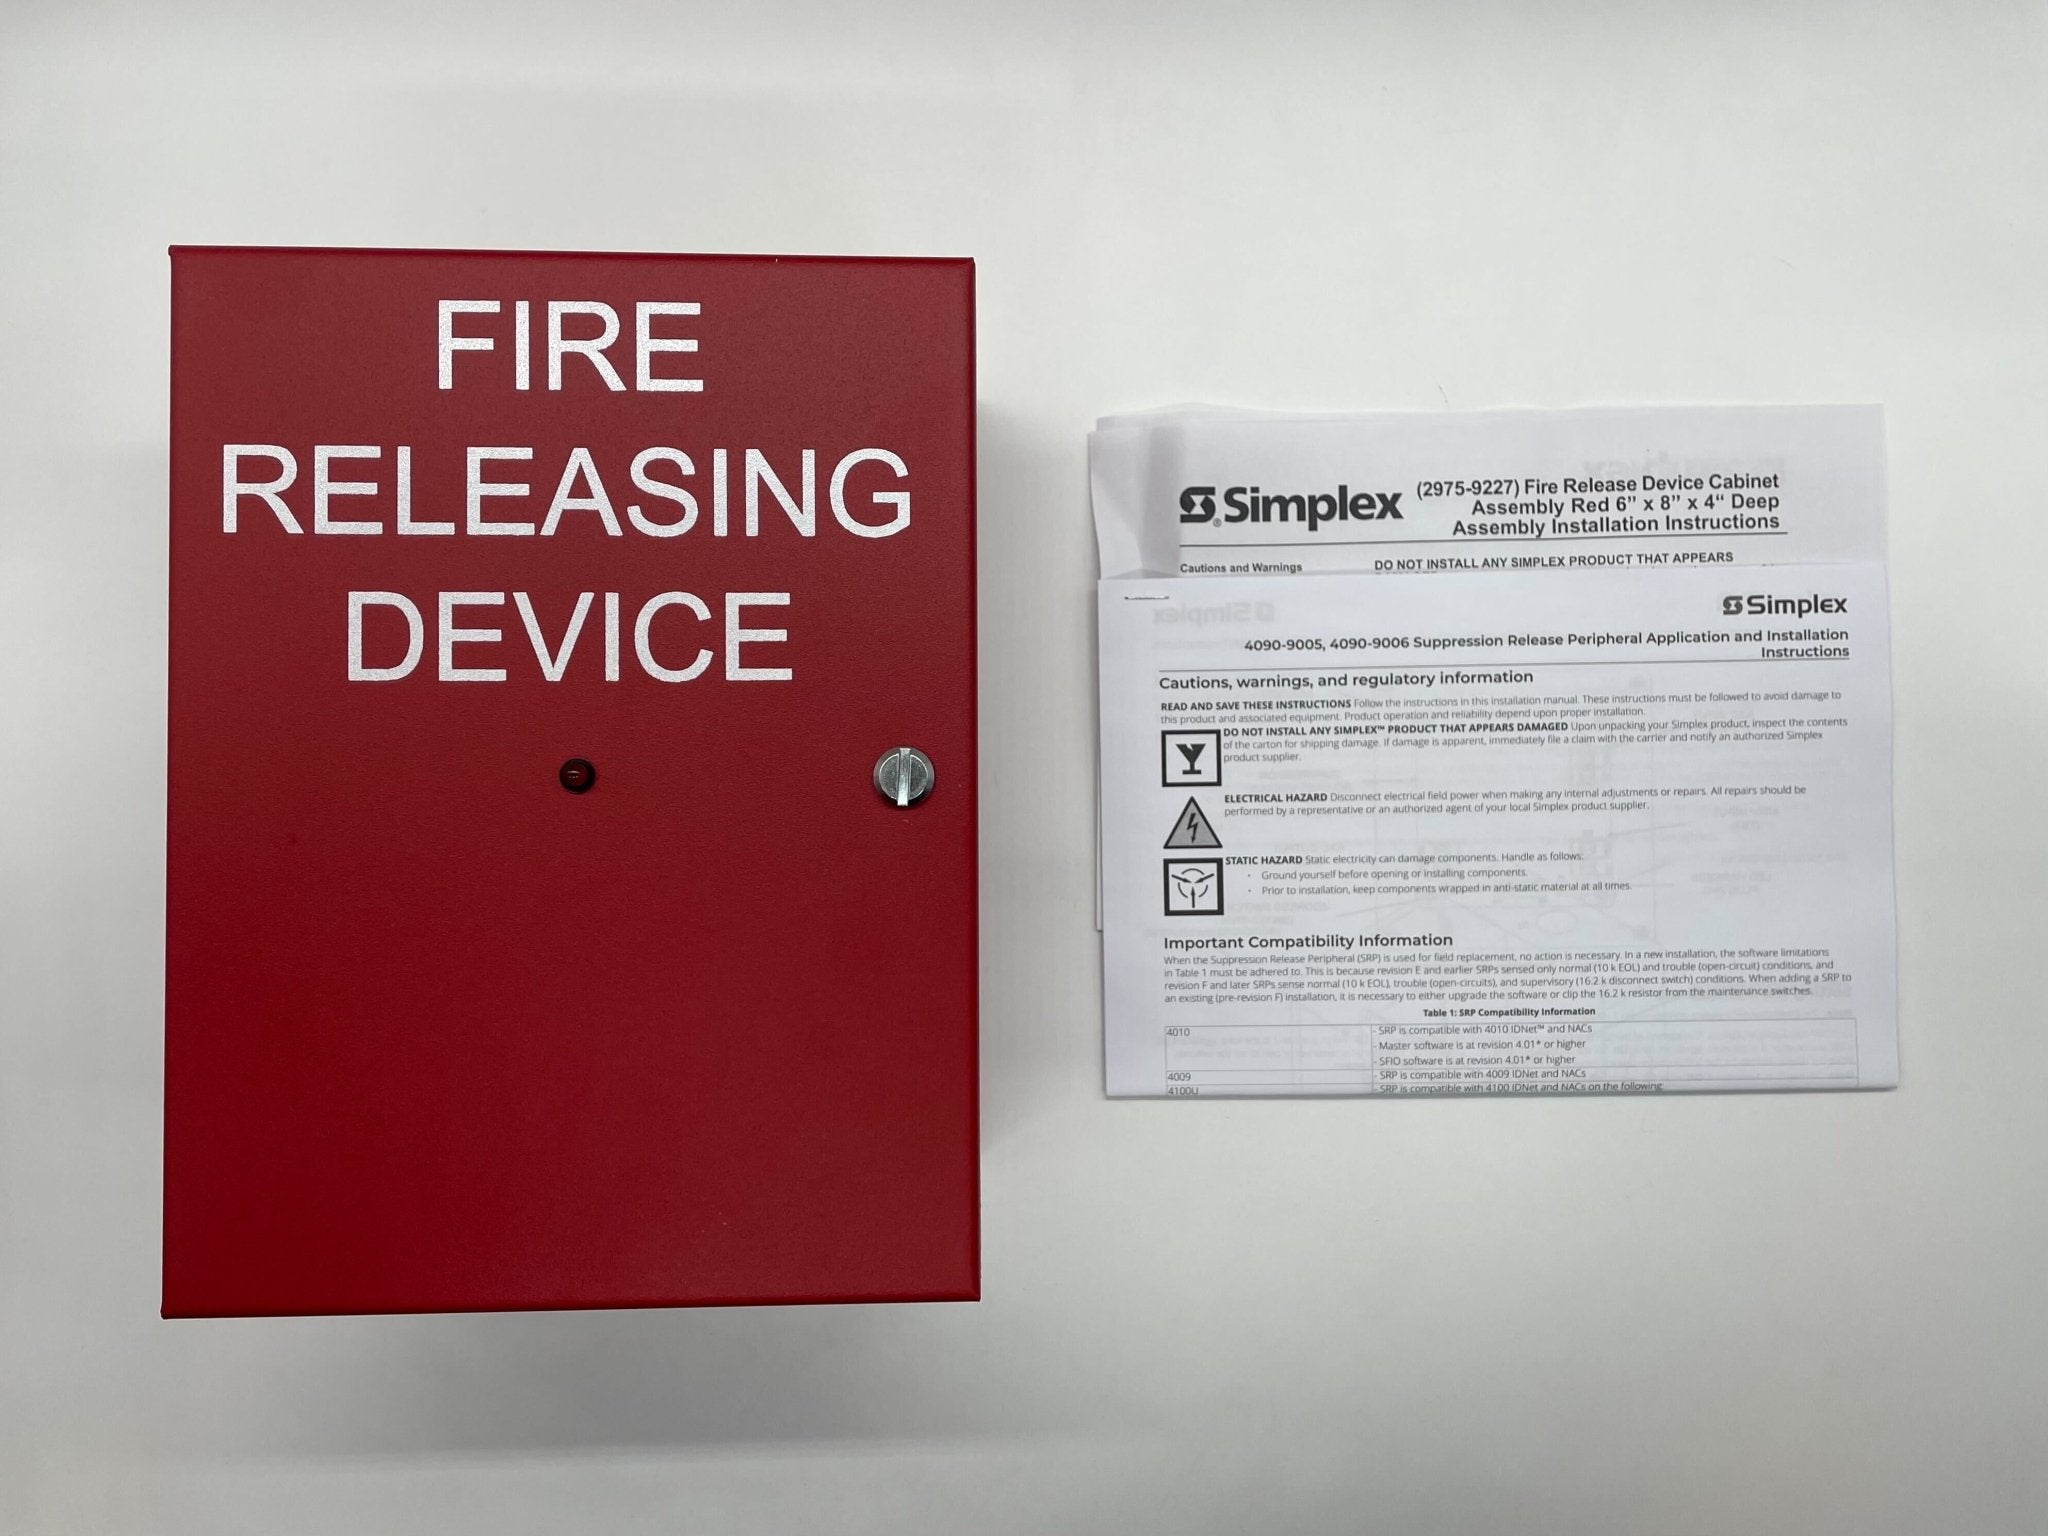 Simplex 4090-9006 - The Fire Alarm Supplier